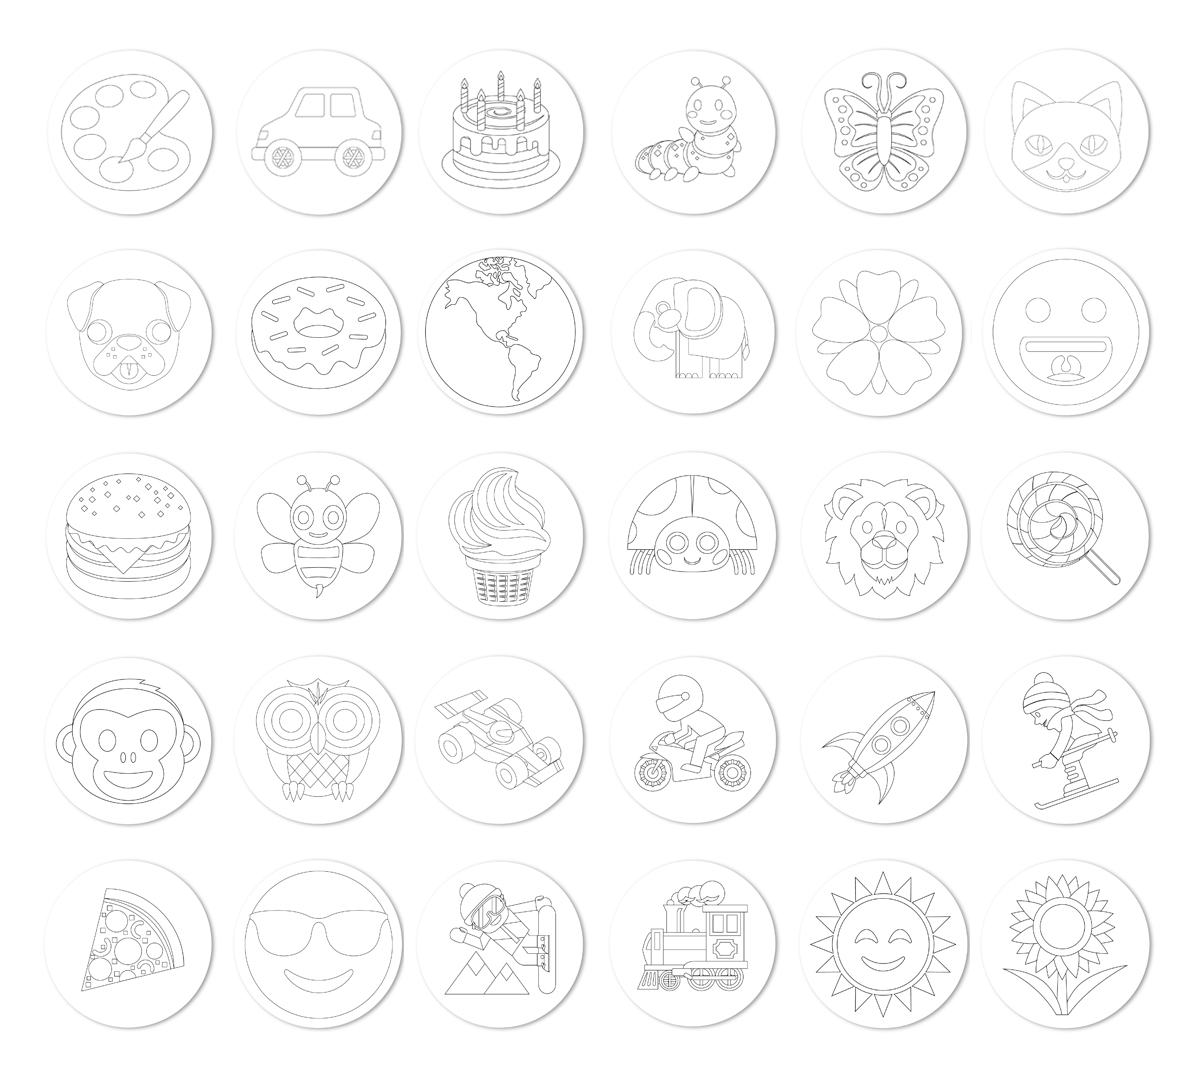 EmojiOne wall graphics from Walls360 + New COLORING Wall Emojis! #EmojiOne #Walls360